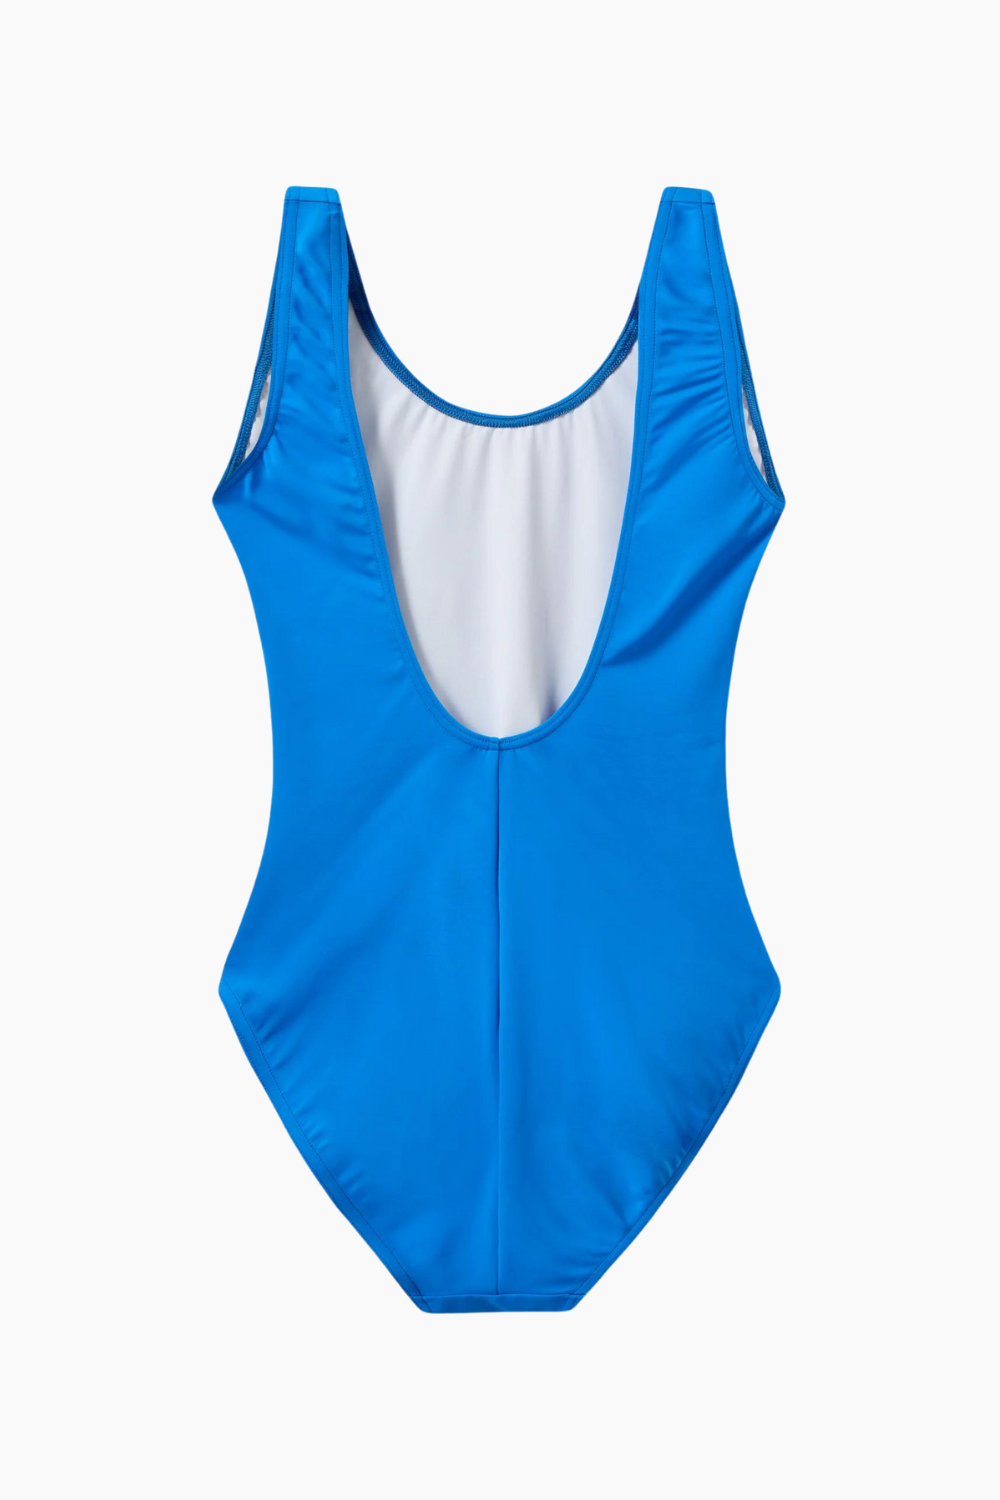 Tornø Logo Swim Suit - King Blue - H2O